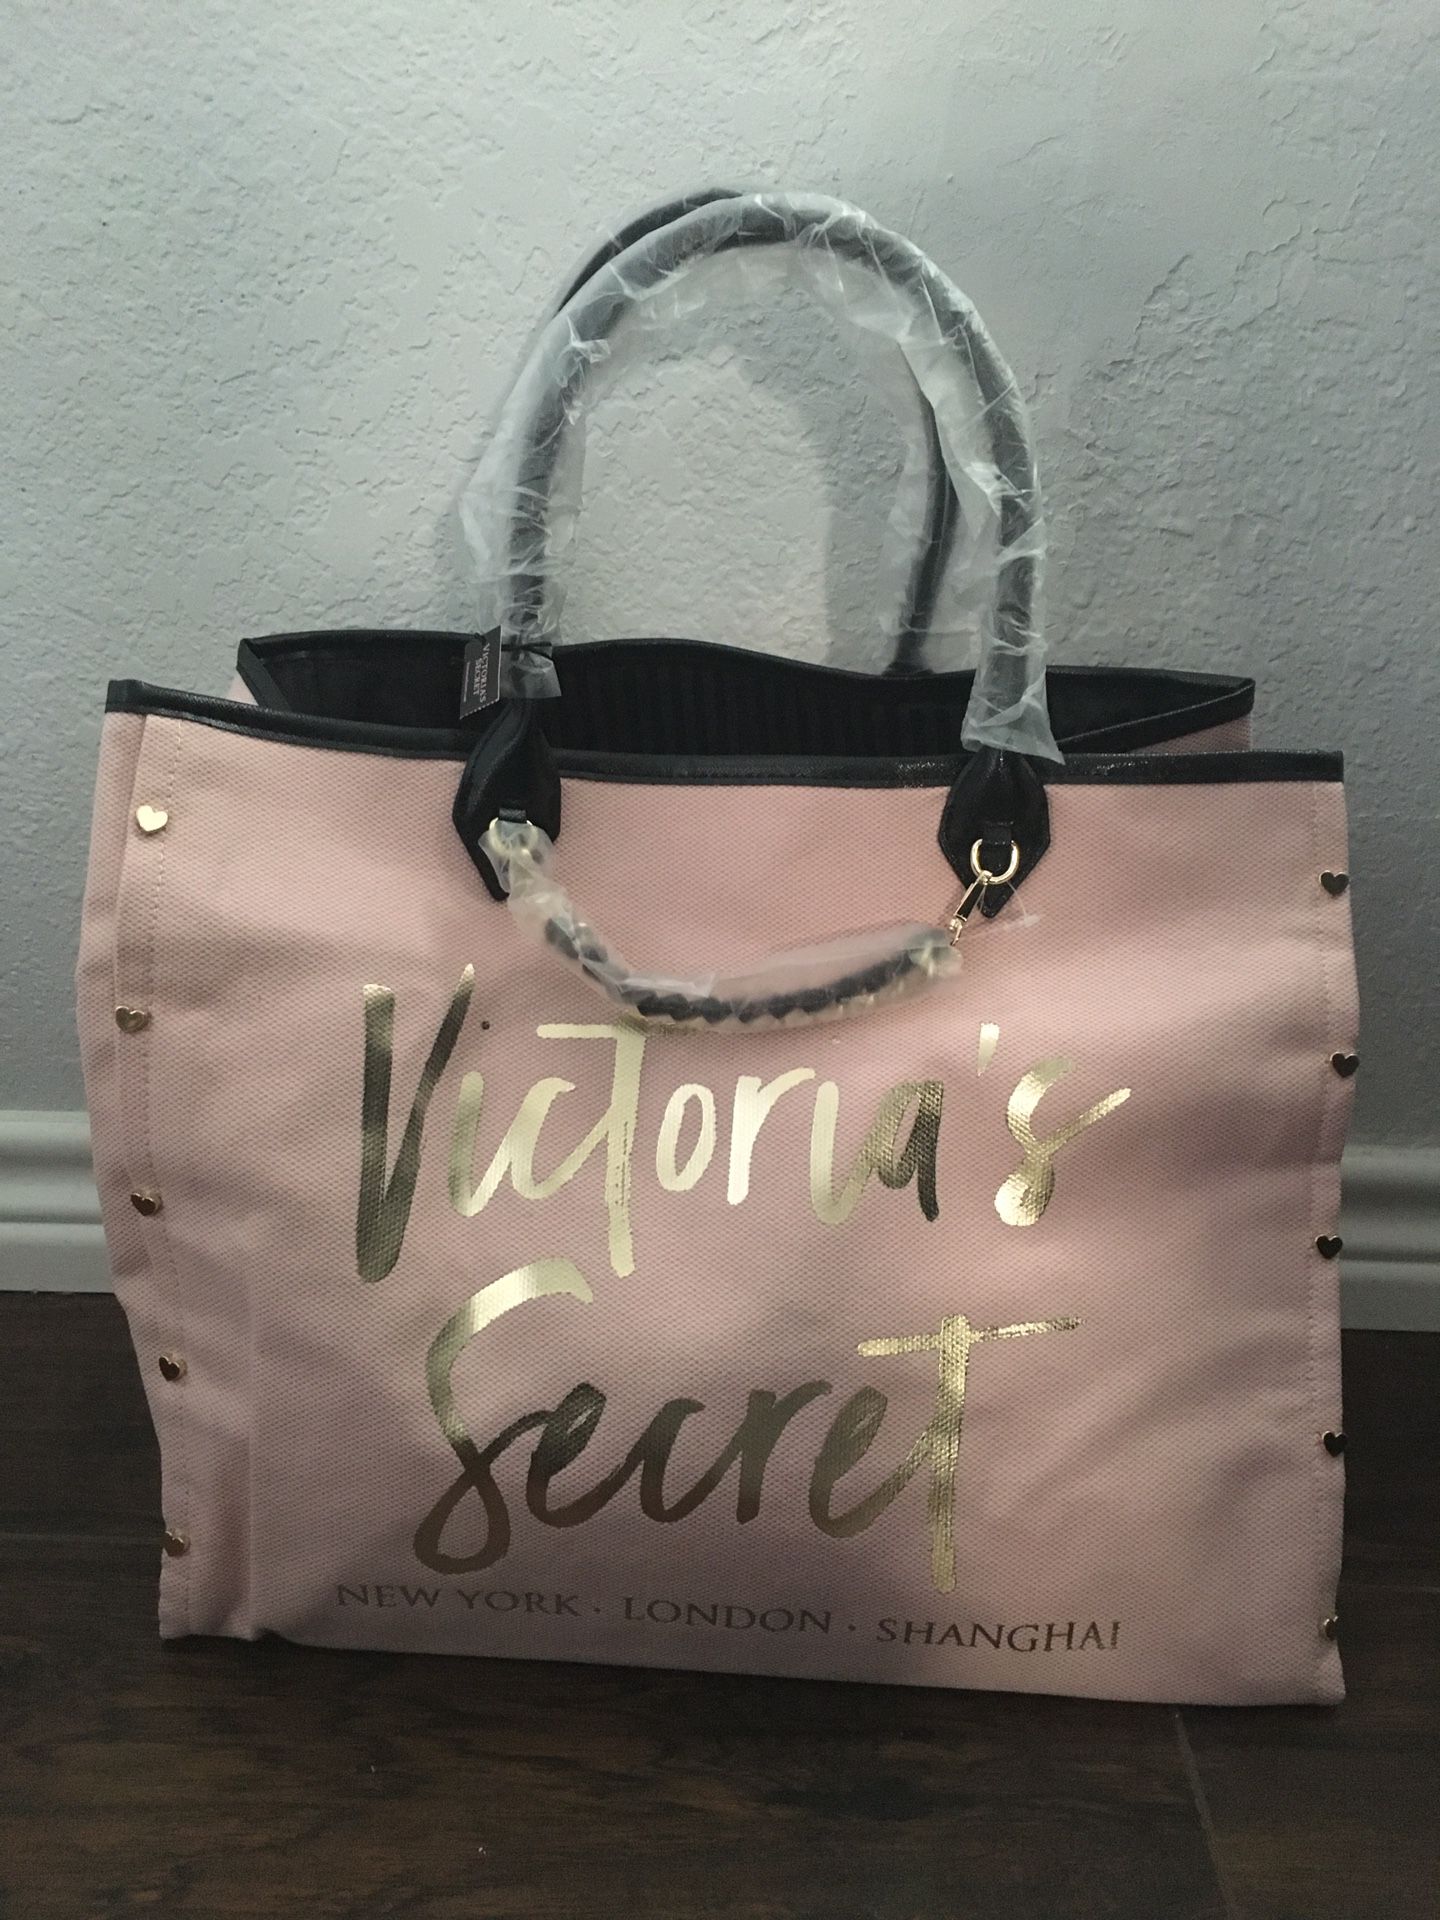 Brand new large size Victoria secret pink tote bag